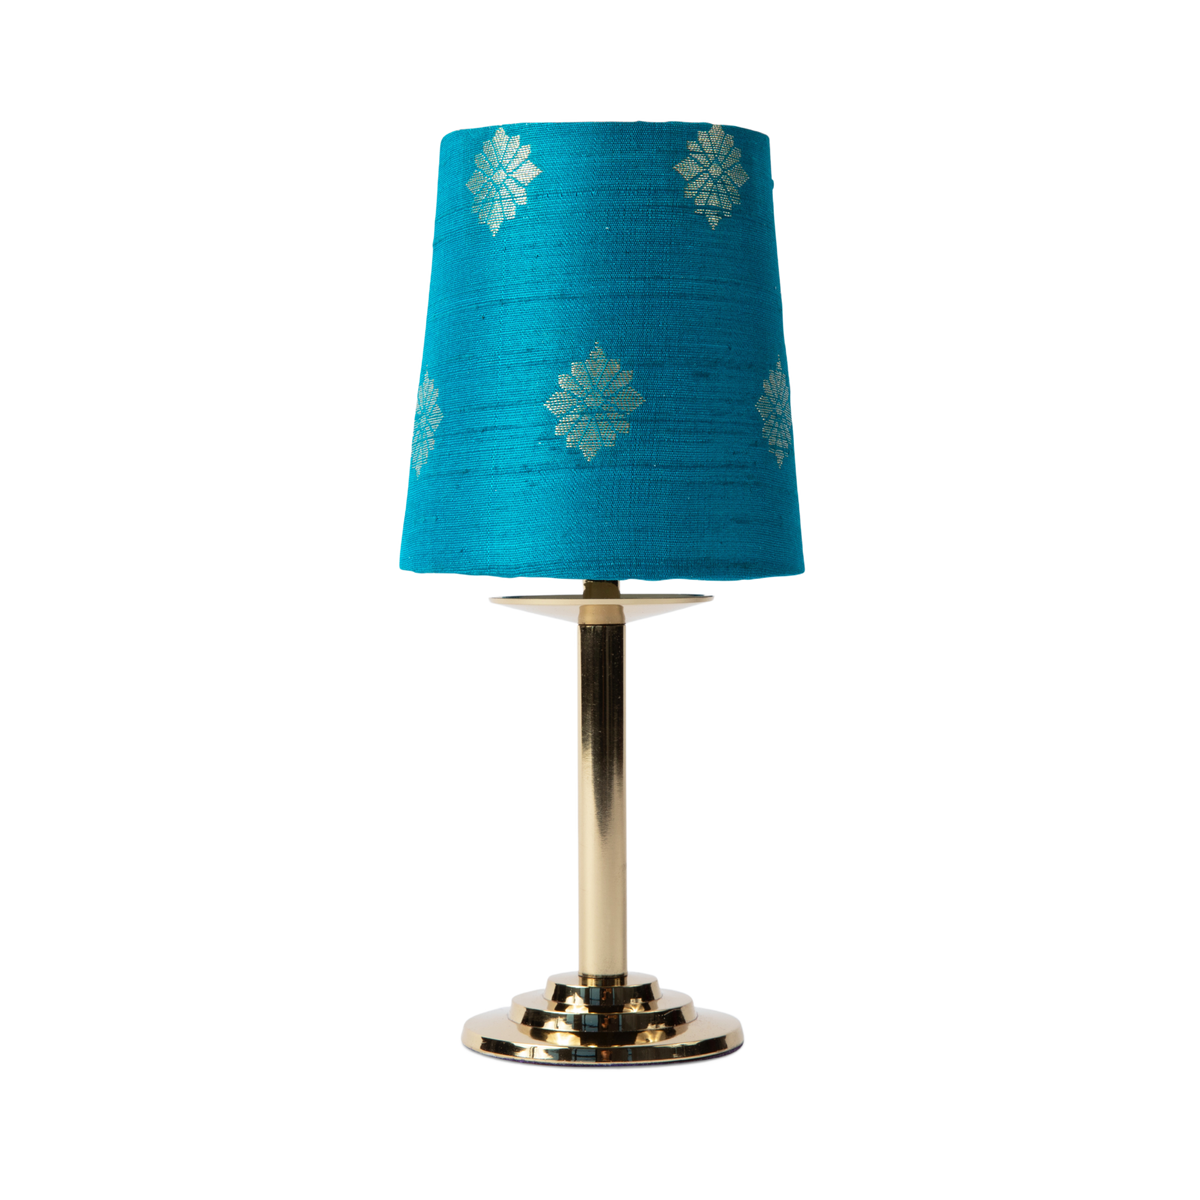 Sari Table Lamp with Shade